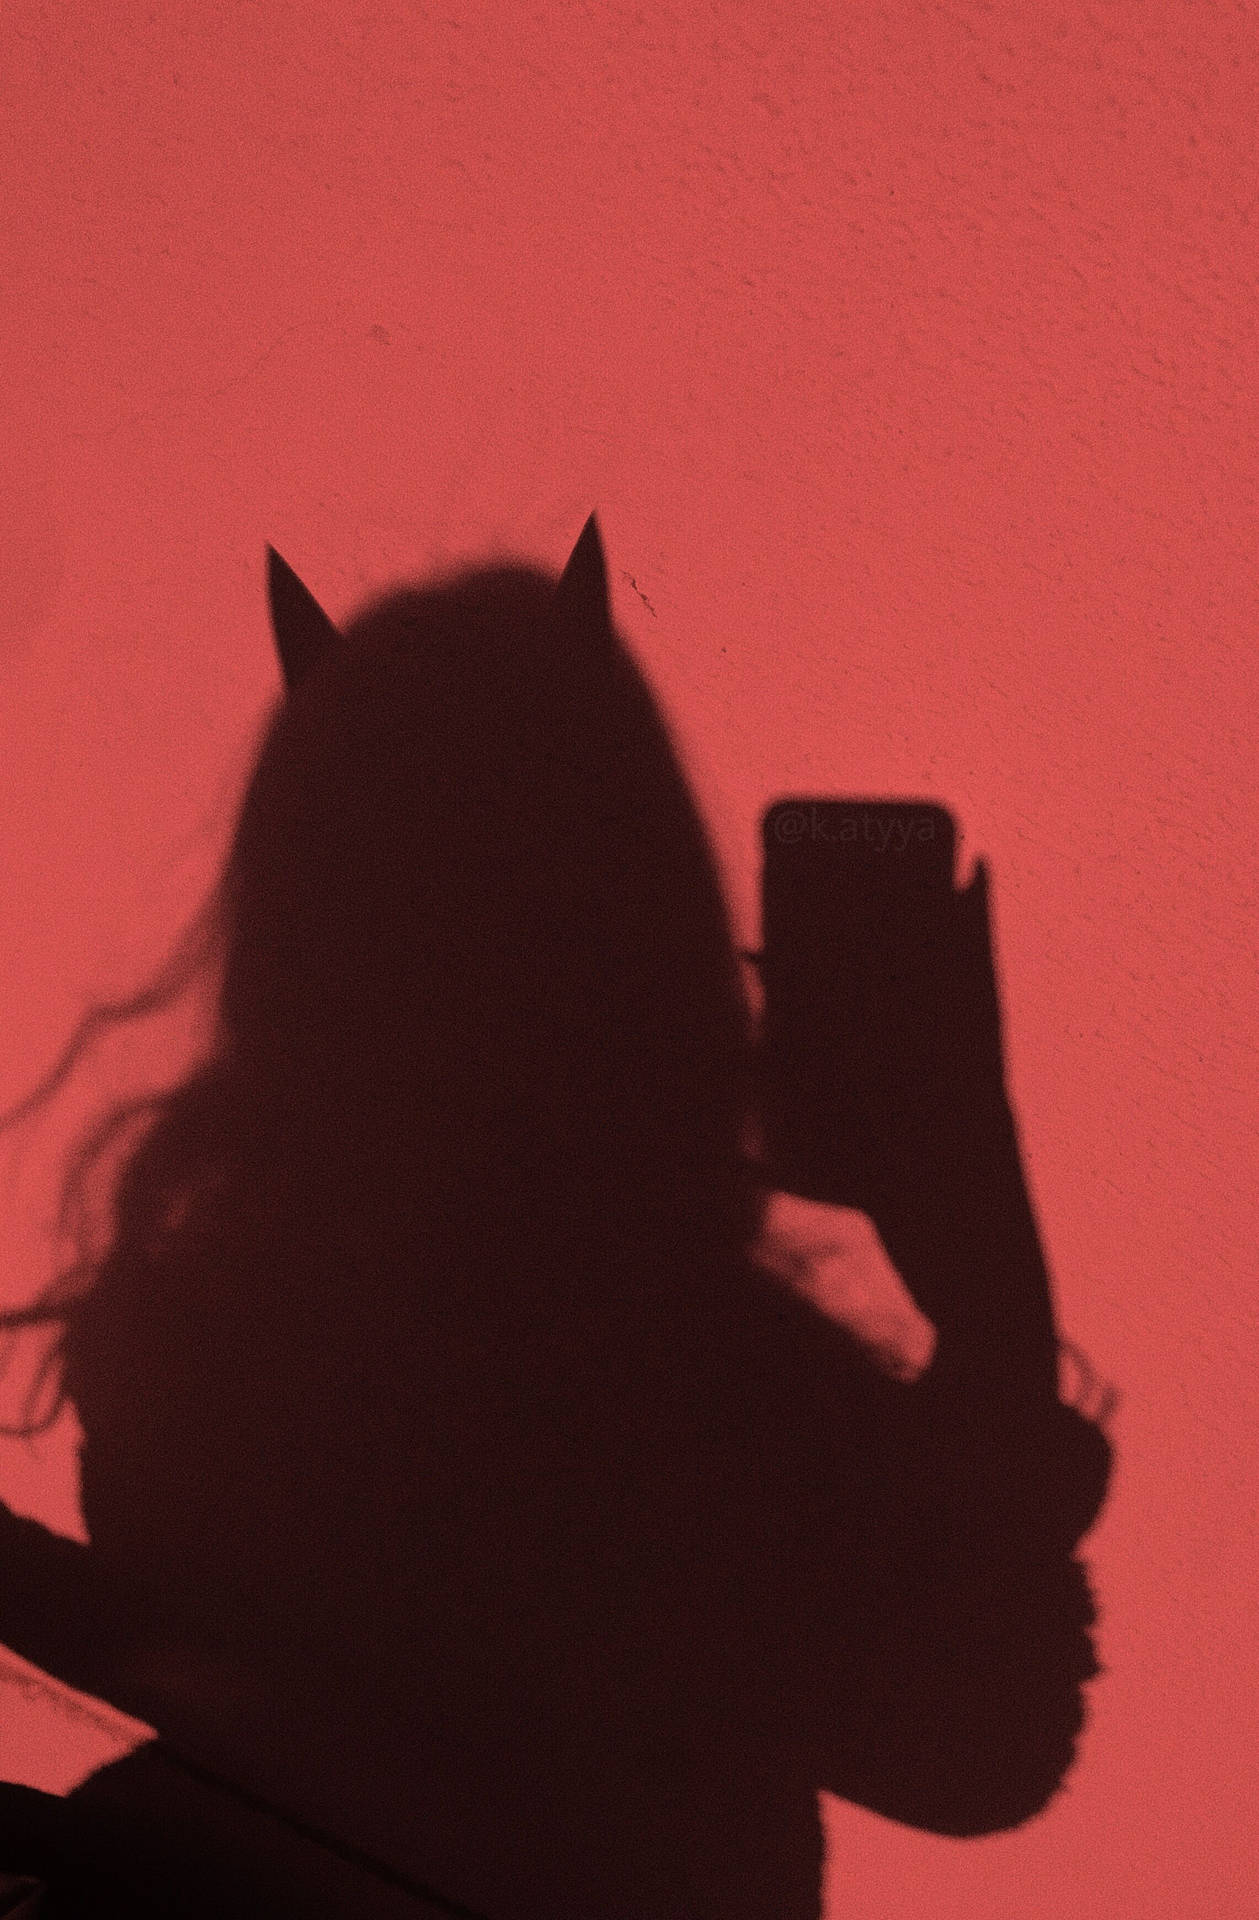 Caption: Surreal Aesthetic Profile - Devil Woman Shadow